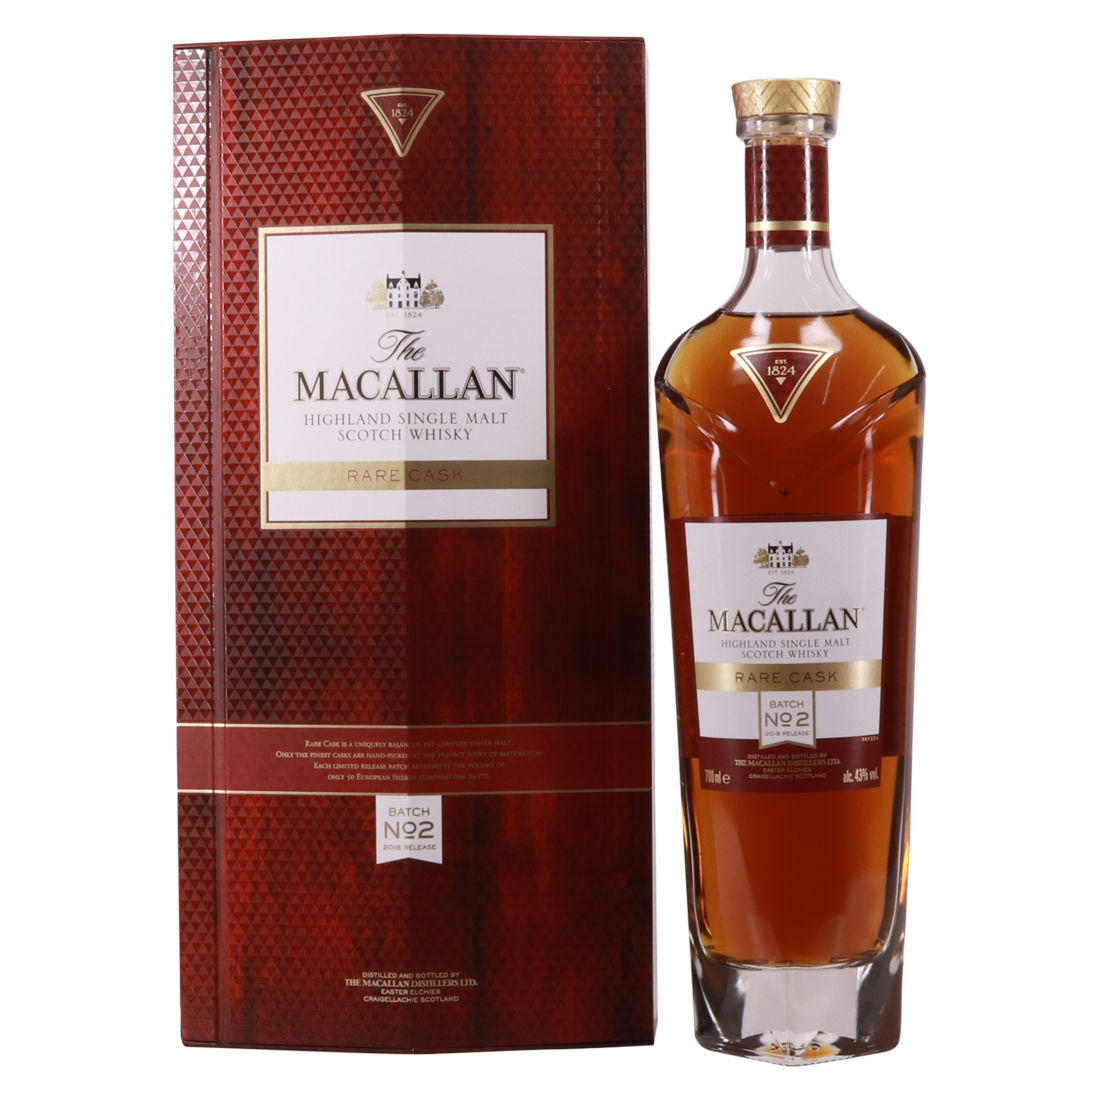 Macallan Rare Cask Batch No 2 2018 Auction The Grand Whisky Auction